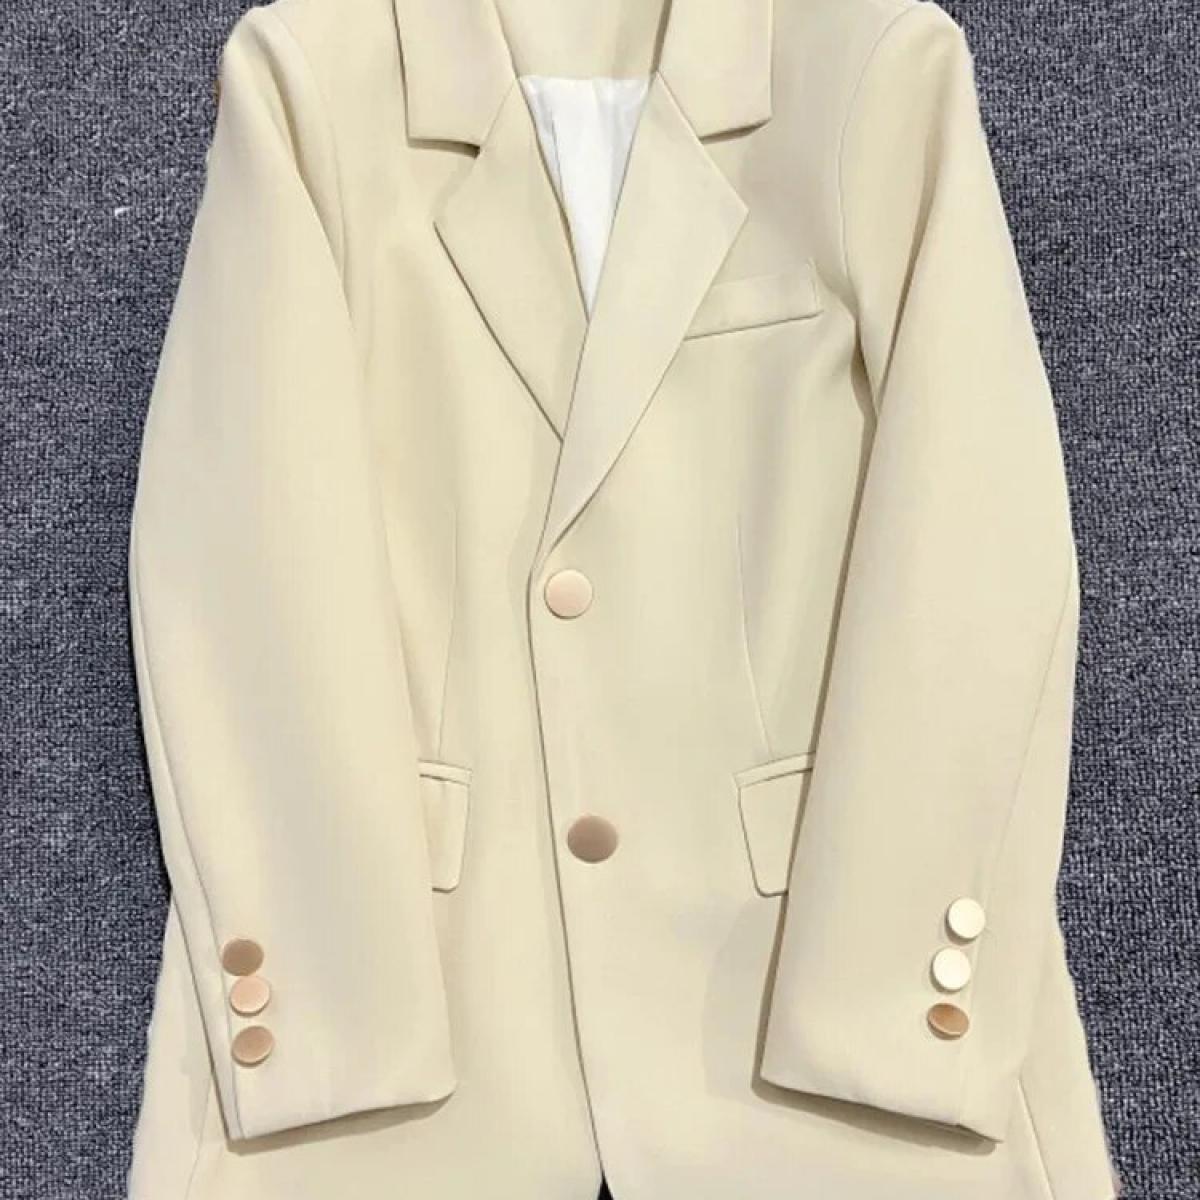 Xfpv  Beige Metal Button Suit Tops Women Single Button Blazer Coat Jacket 2023 Fashion New Trend Spring Autumn Sm4982